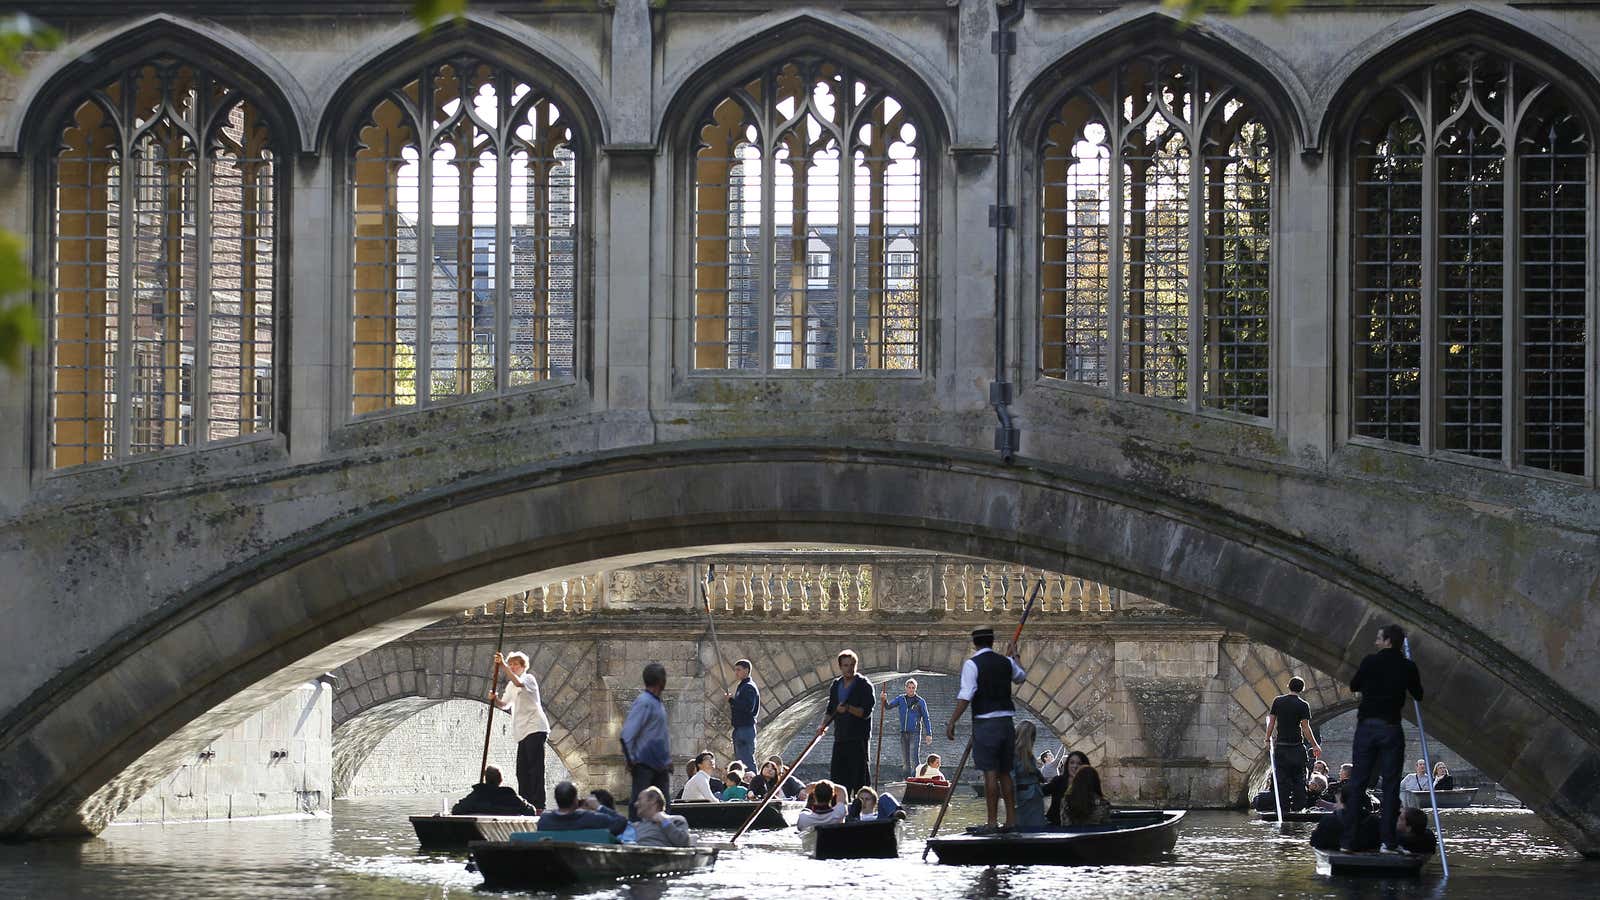 The university regulator will watch over Cambridge University.